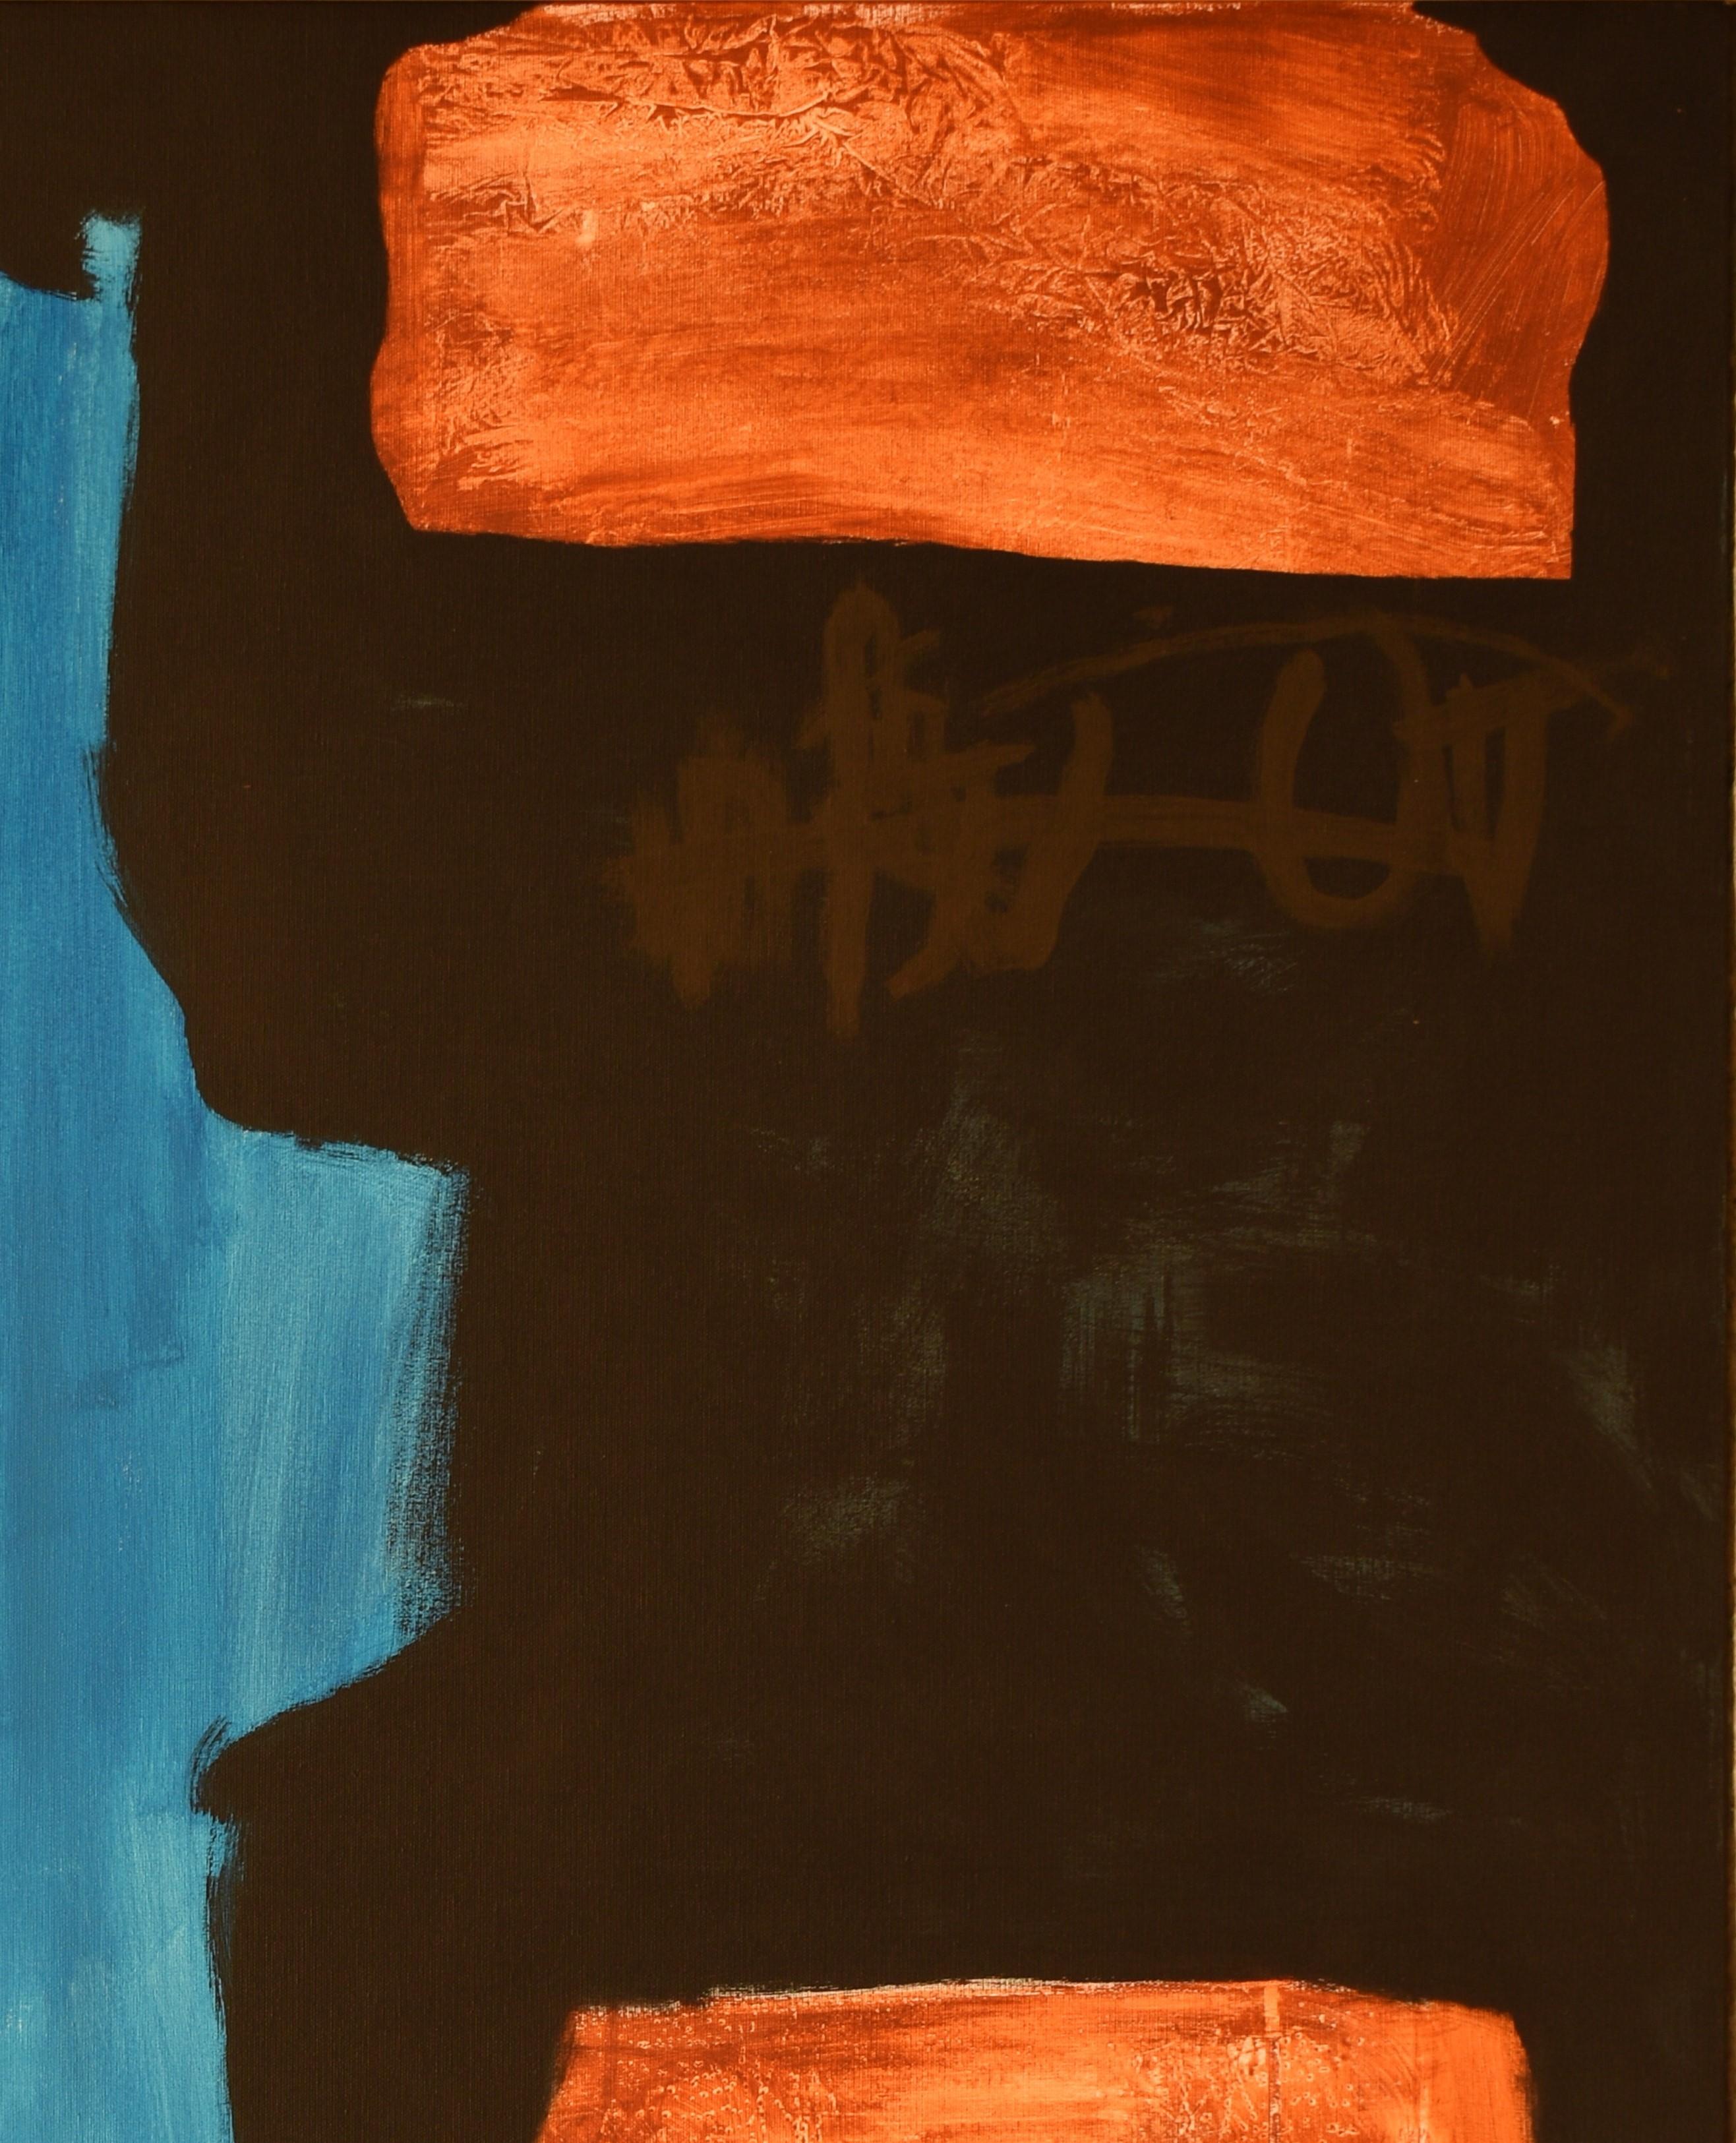 Ruz  Black  Orange  Blue  Vertical  Origen Landscapes -  Abstract Acrylic   - Painting by RAFAEL RUZ